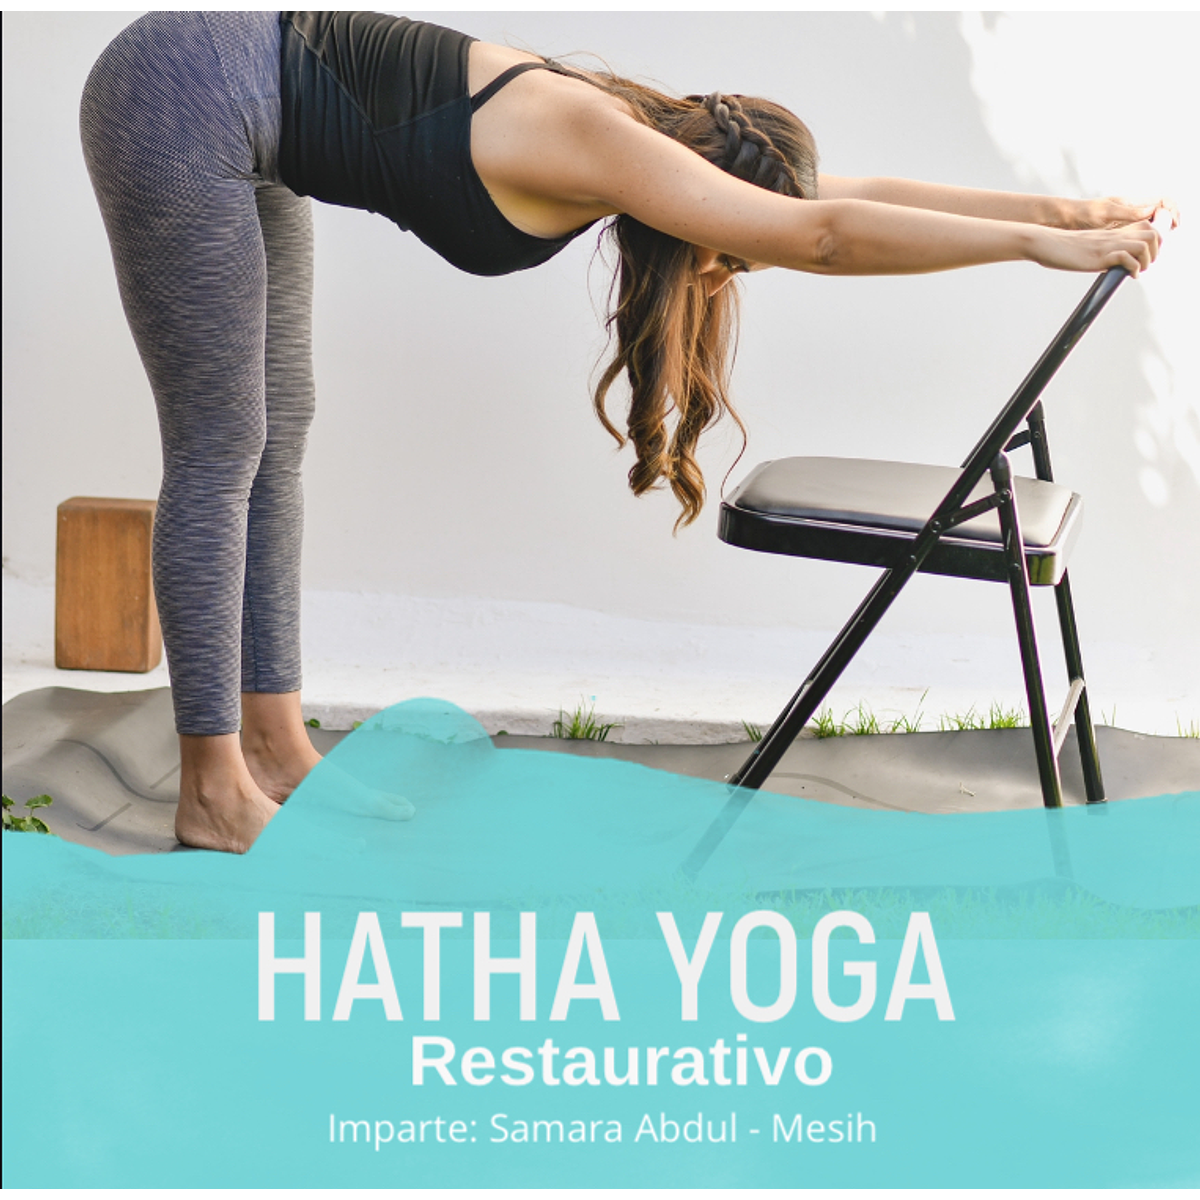 Hatha yoga online